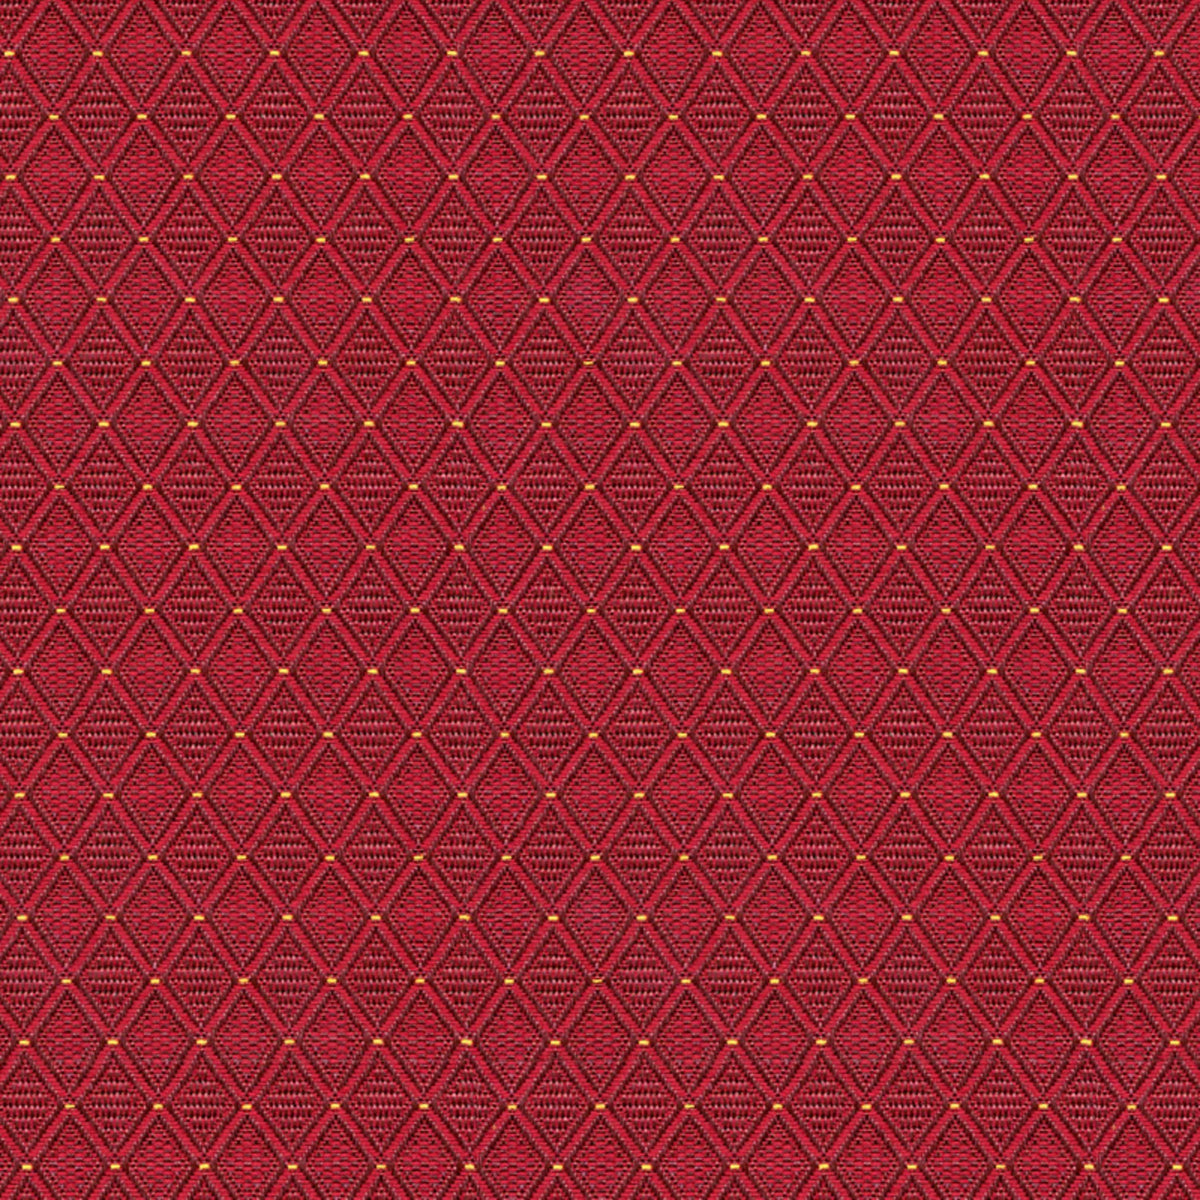 Jewel Red Fabric |#| 